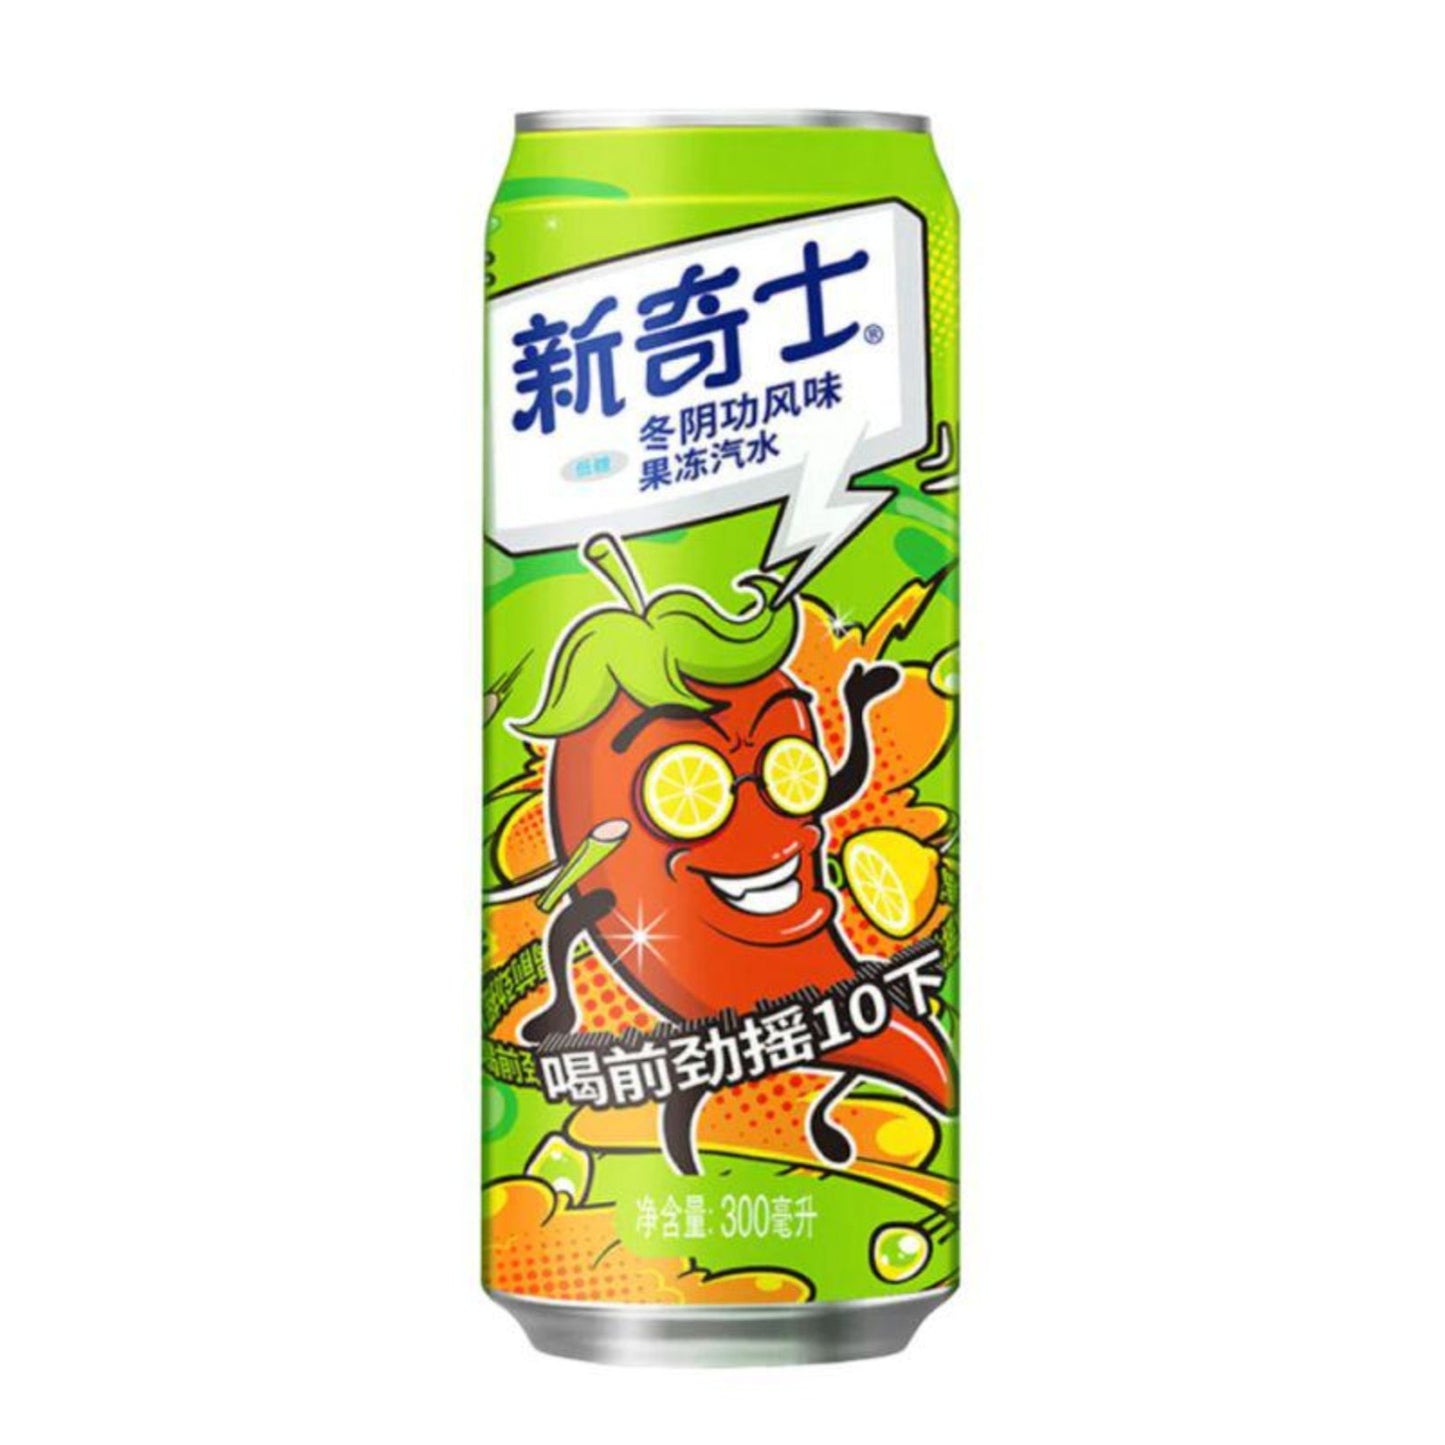 Sunkist Jelly Soda, Tom Yum Flavor (300ml) (6-Pack)